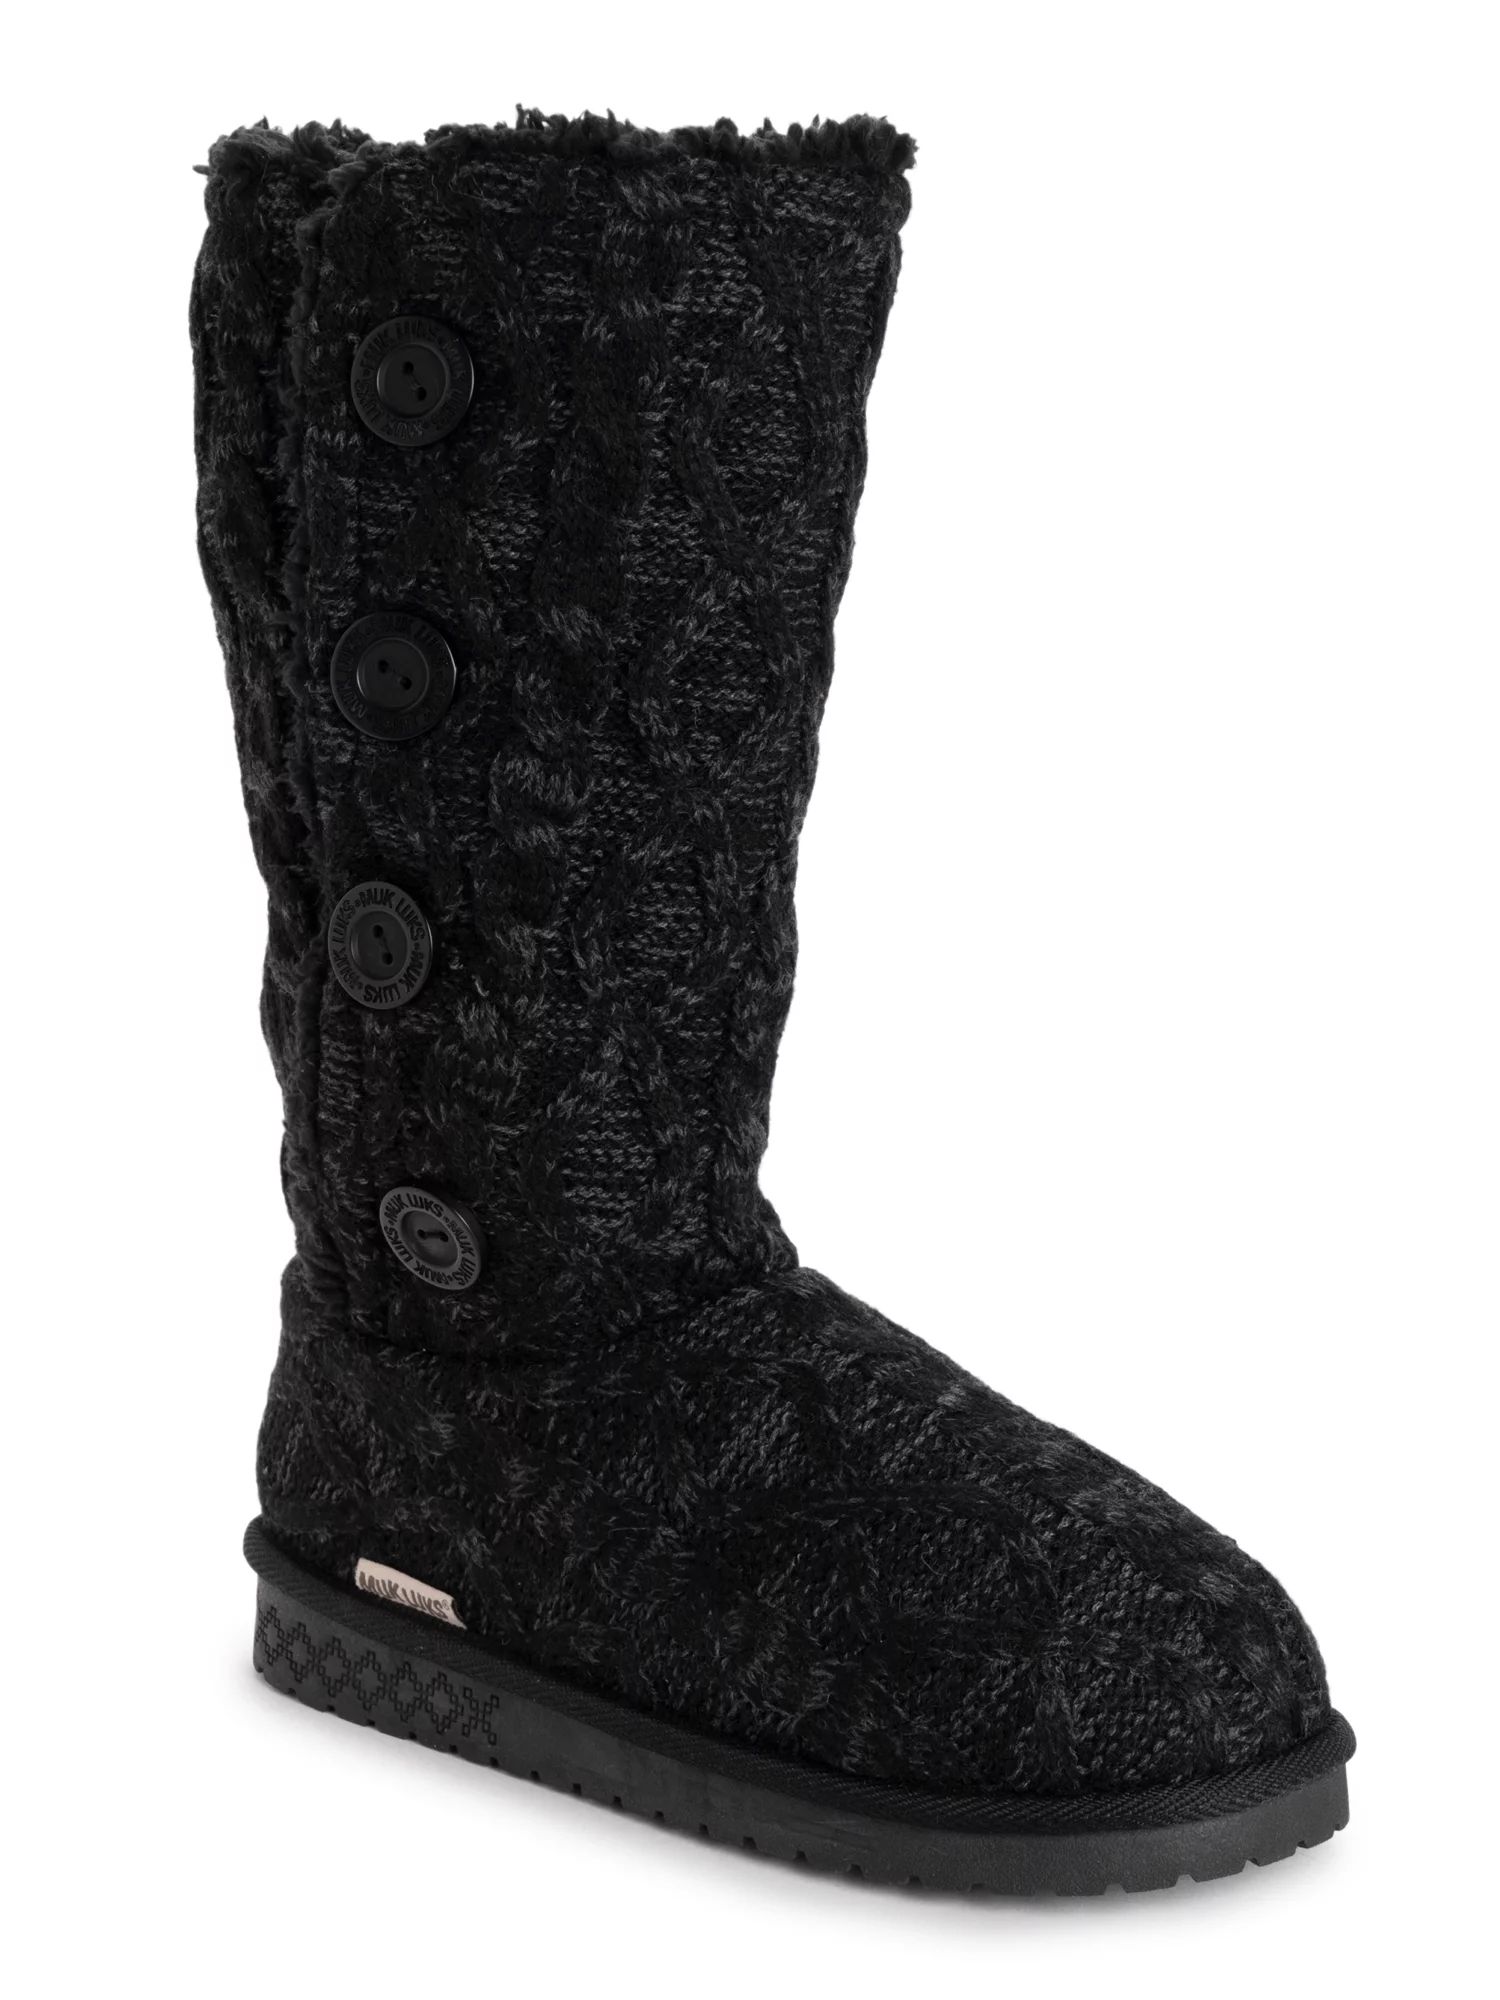 Muk Luks Women's Lilyana Marl Cable Knit Knee High Boots, Sizes 6-11 | Walmart (US)